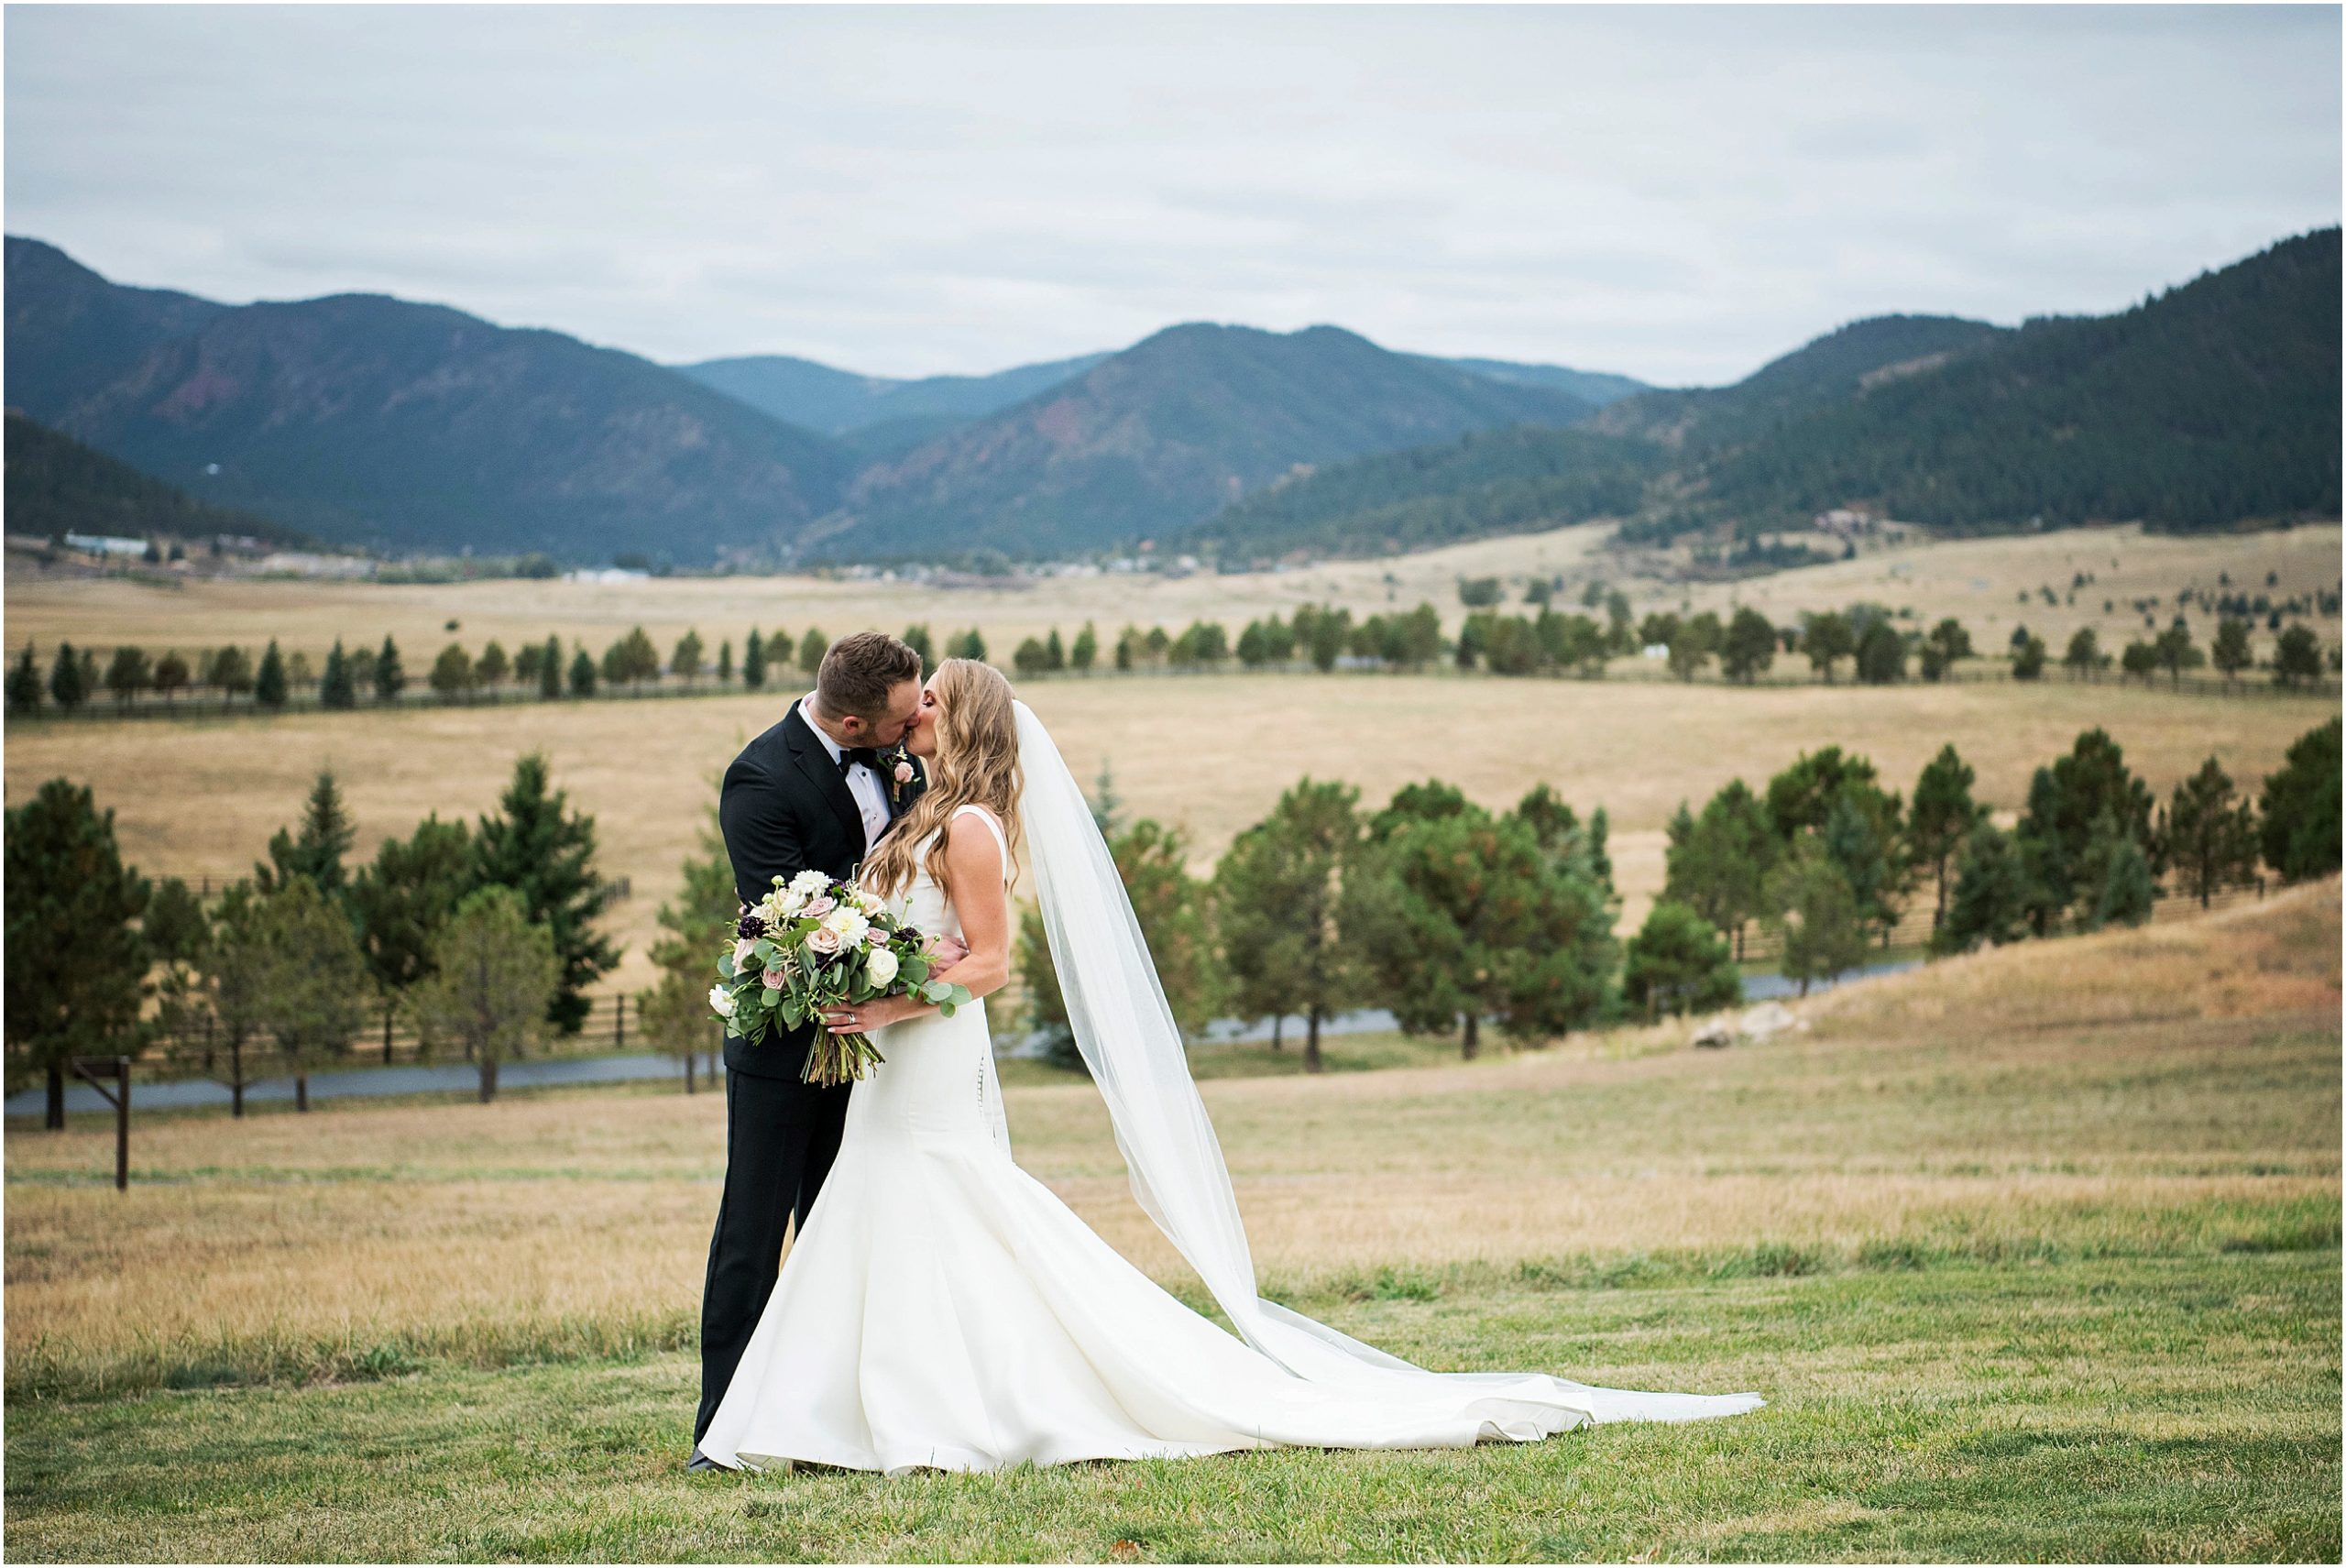 Spruce Mountain Ranch wedding